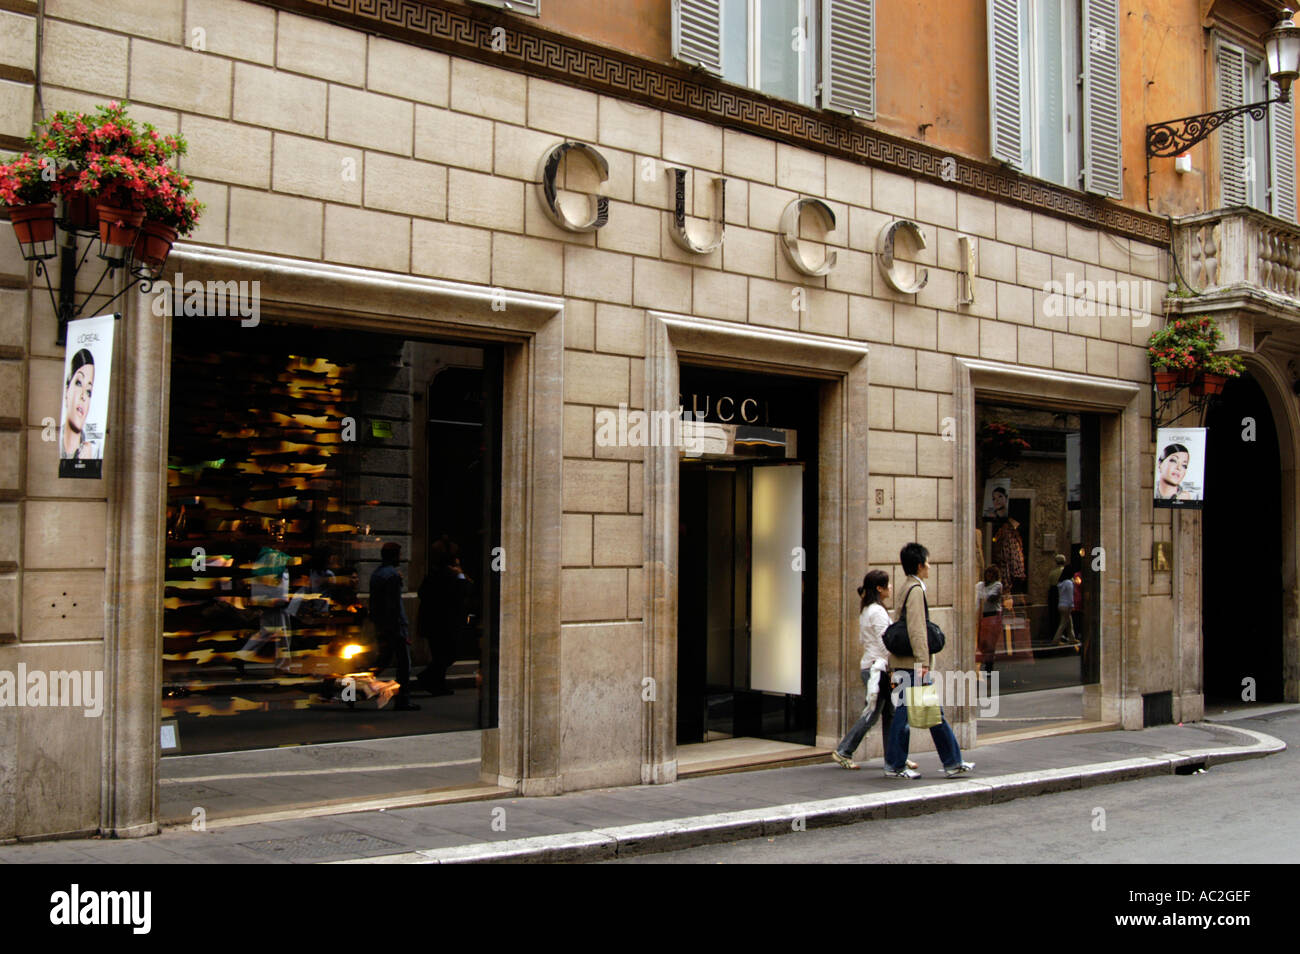 Shopping at Gucci on Via Condotti Rome Italy Stock Photo, Royalty Free Image: 4249838 - Alamy